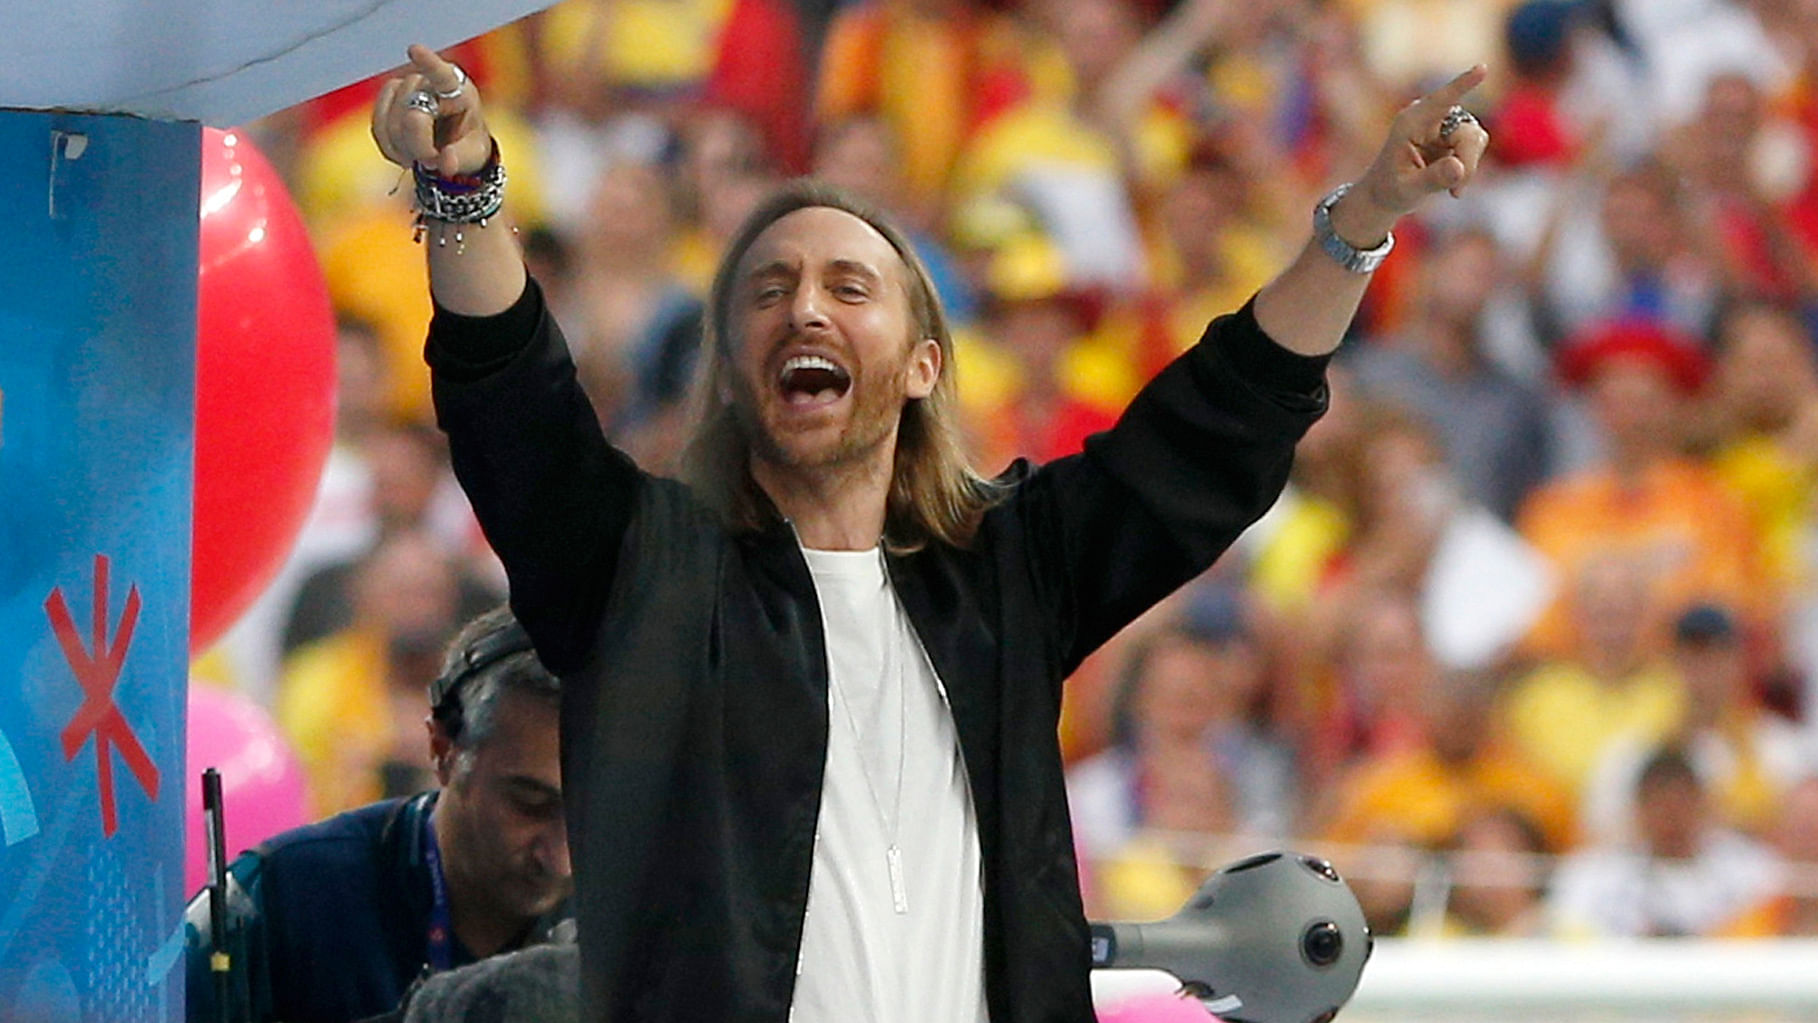 David Guetta was scheduled to perform in Bengaluru this week. (Photo: AP)